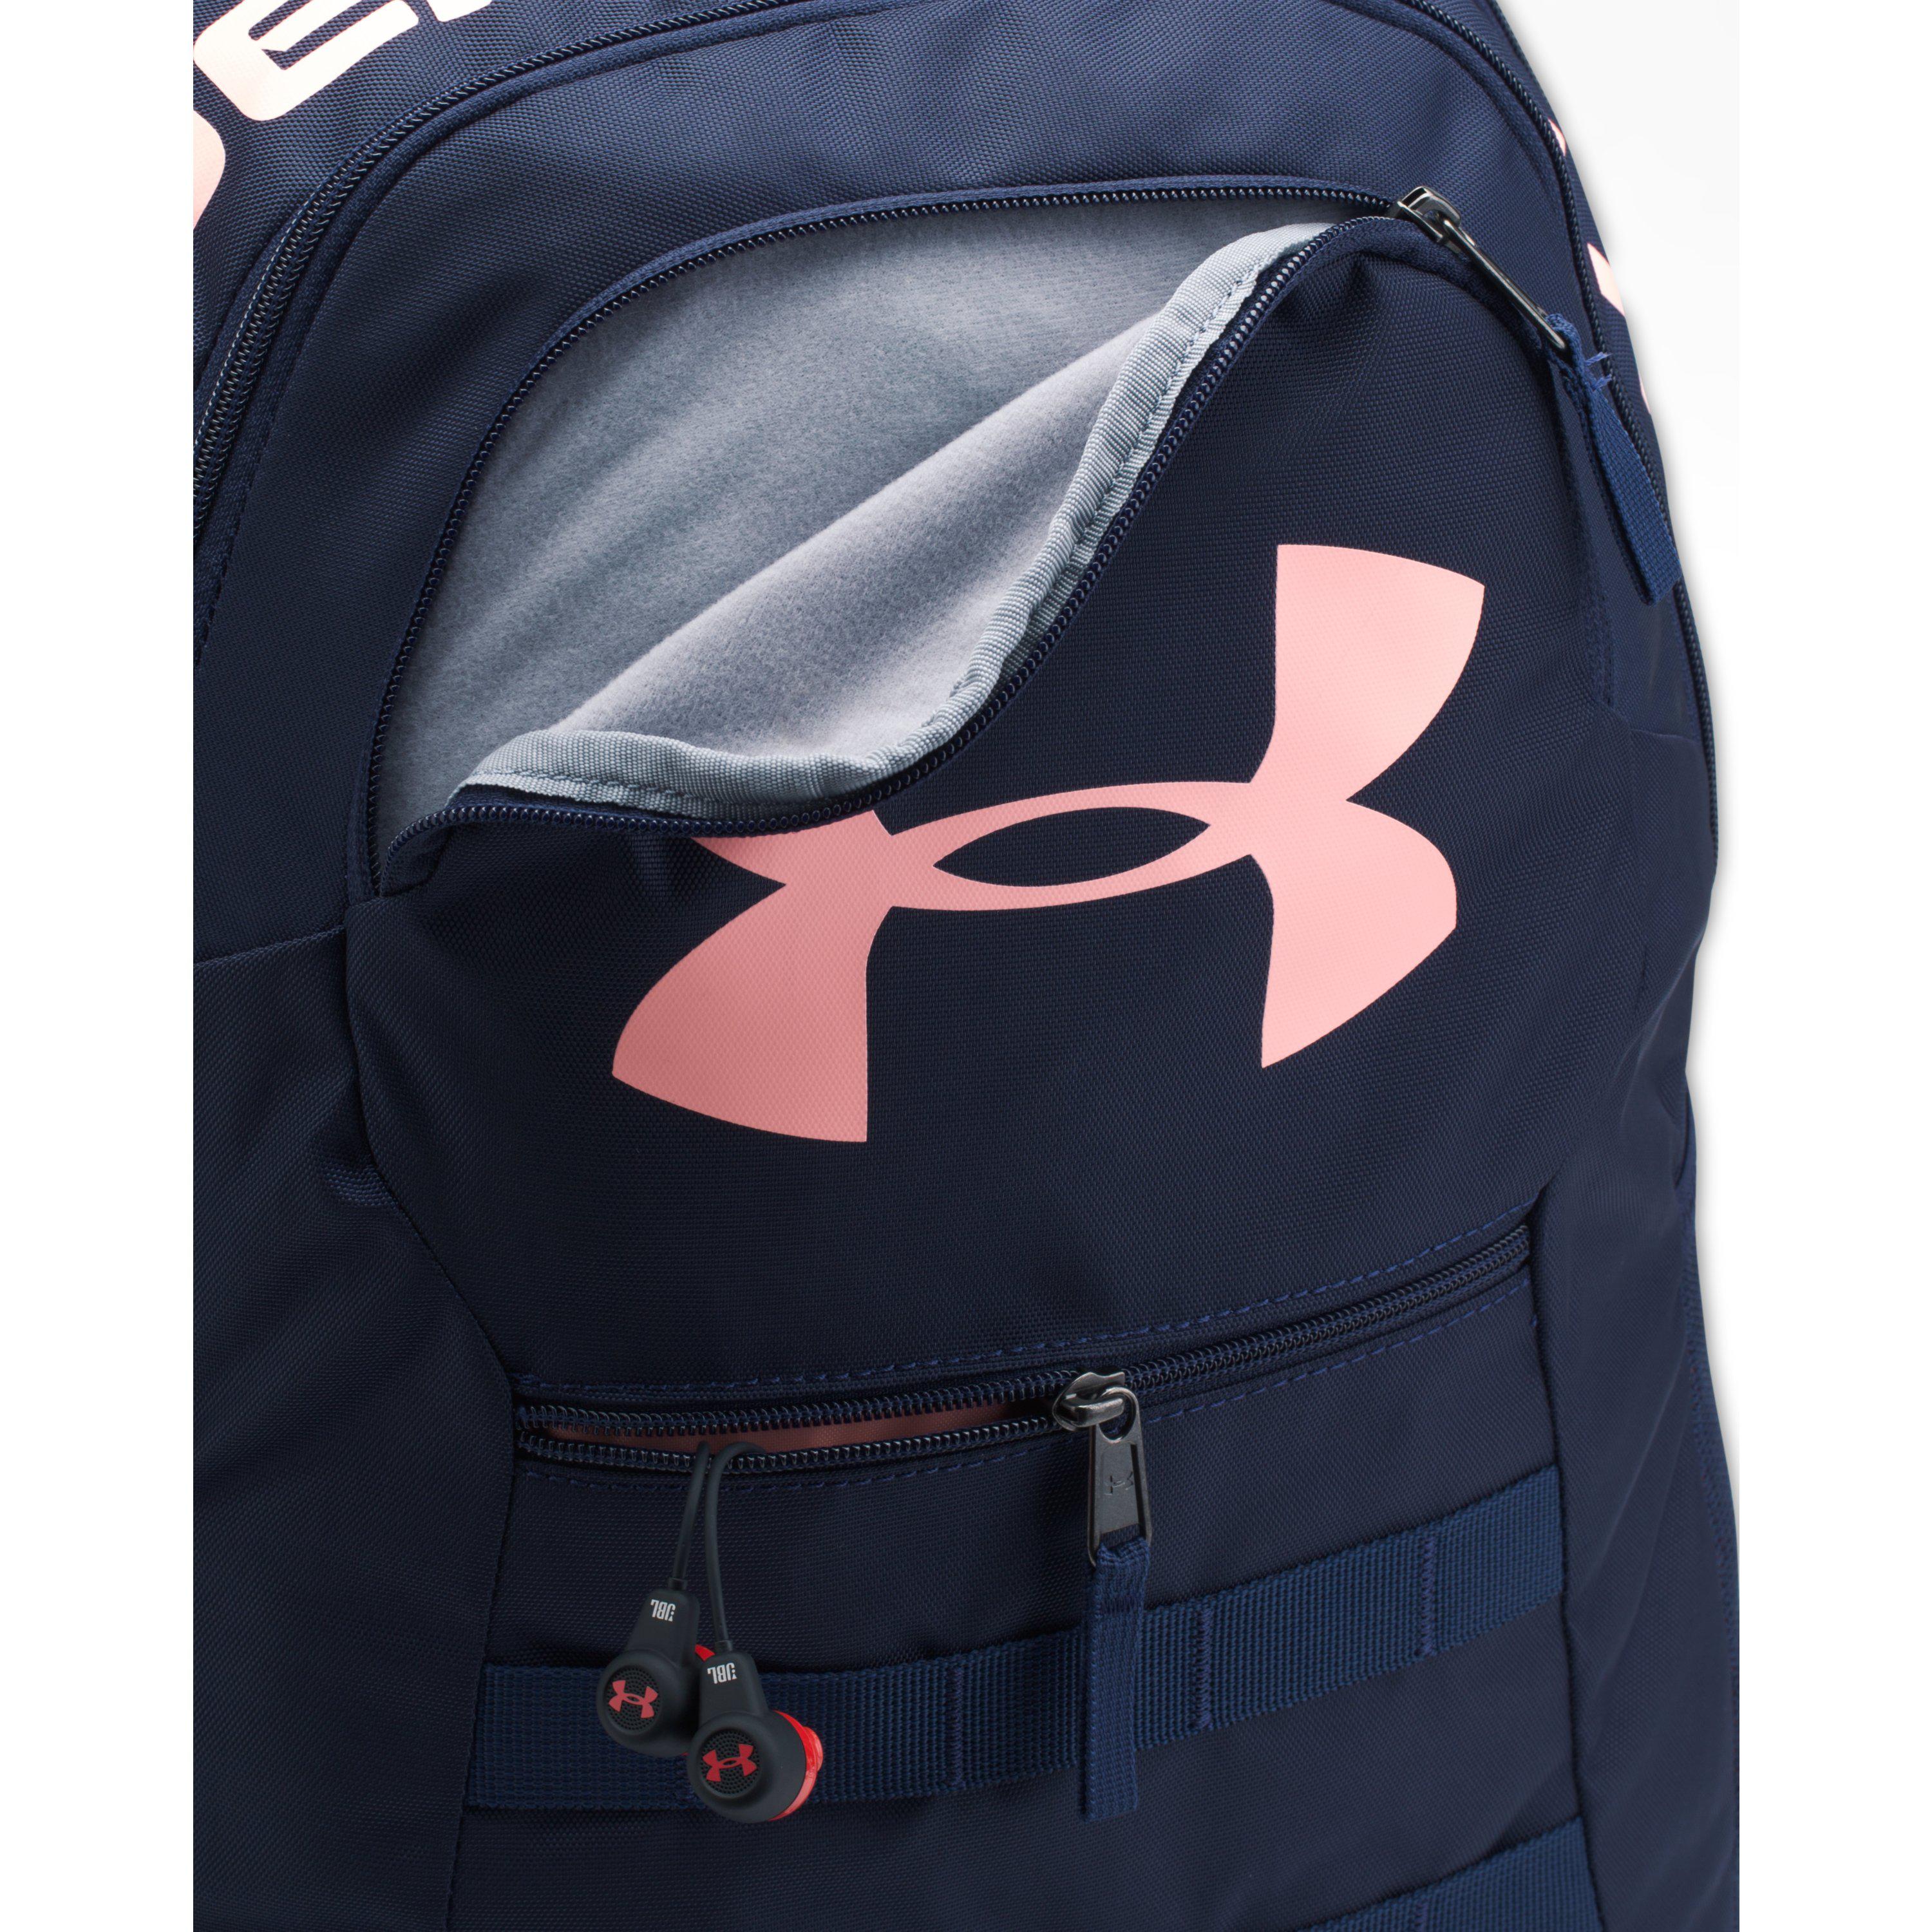 under armor backpack